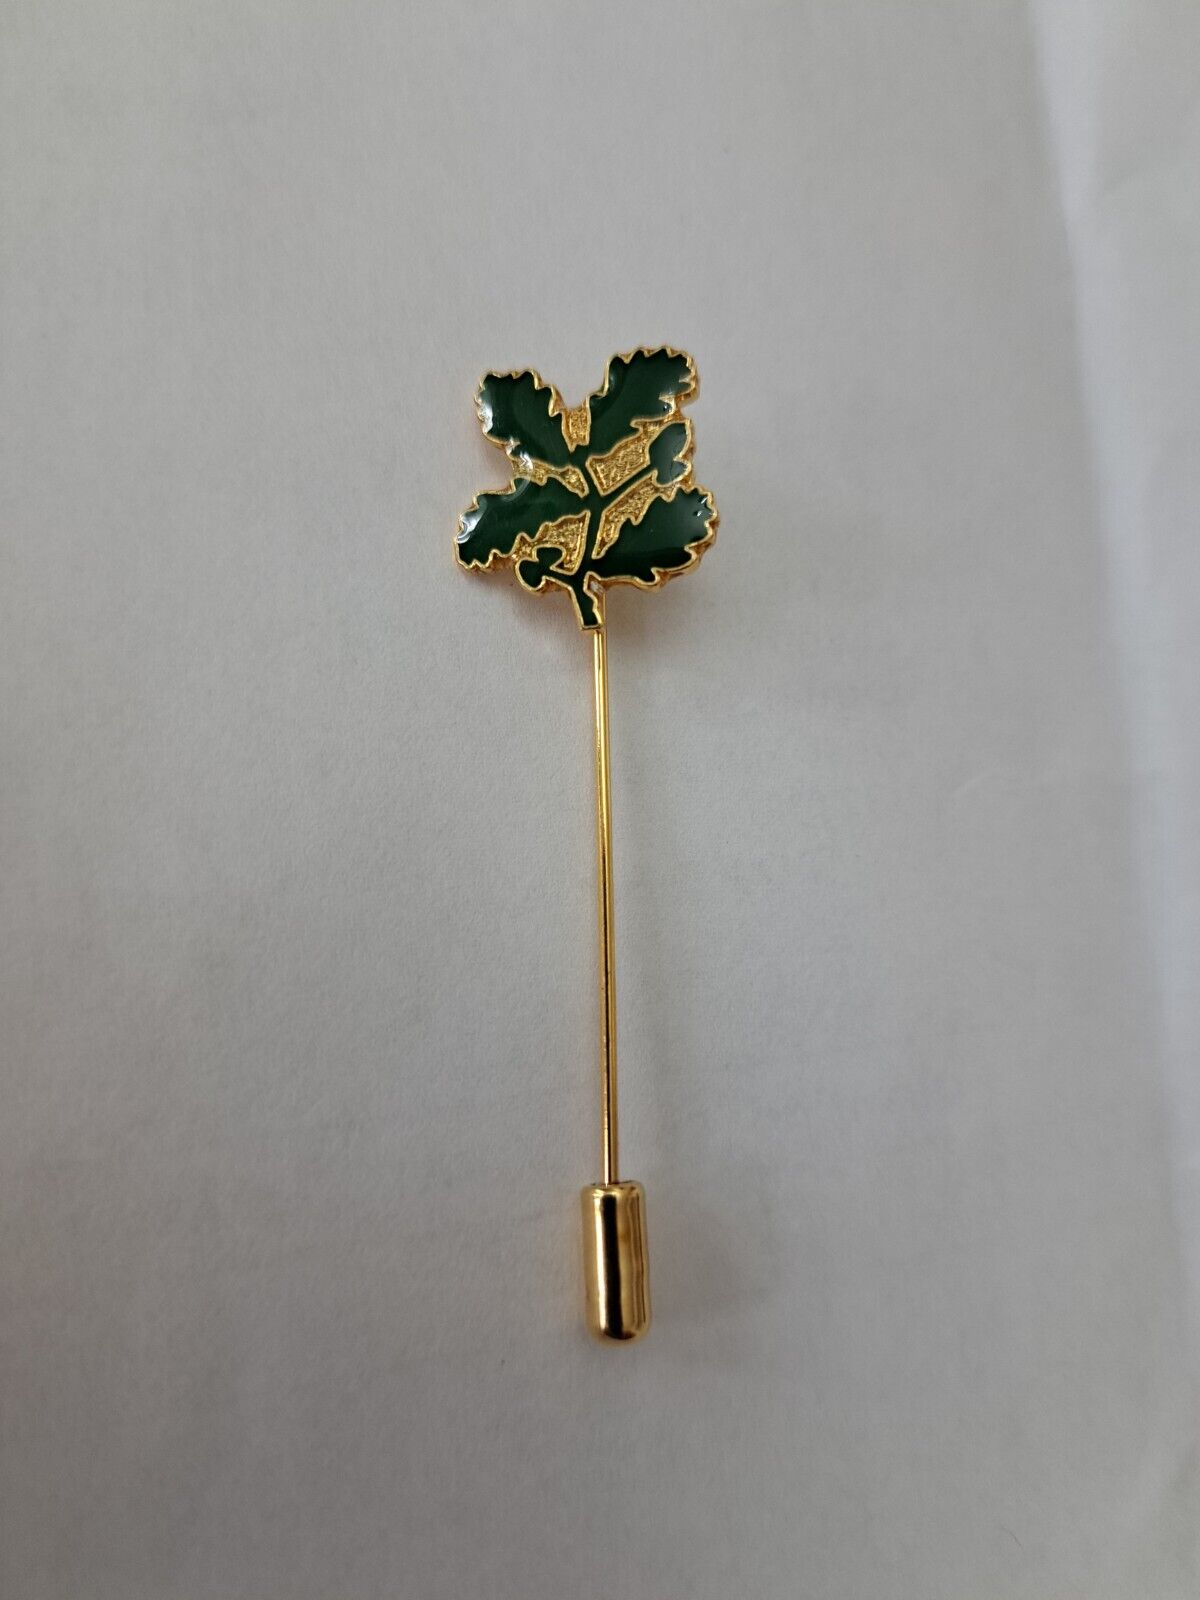 NATIONAL TRUST STICK PIN GREEN ENAMEL GOLD TONE pin badge lapel brooch